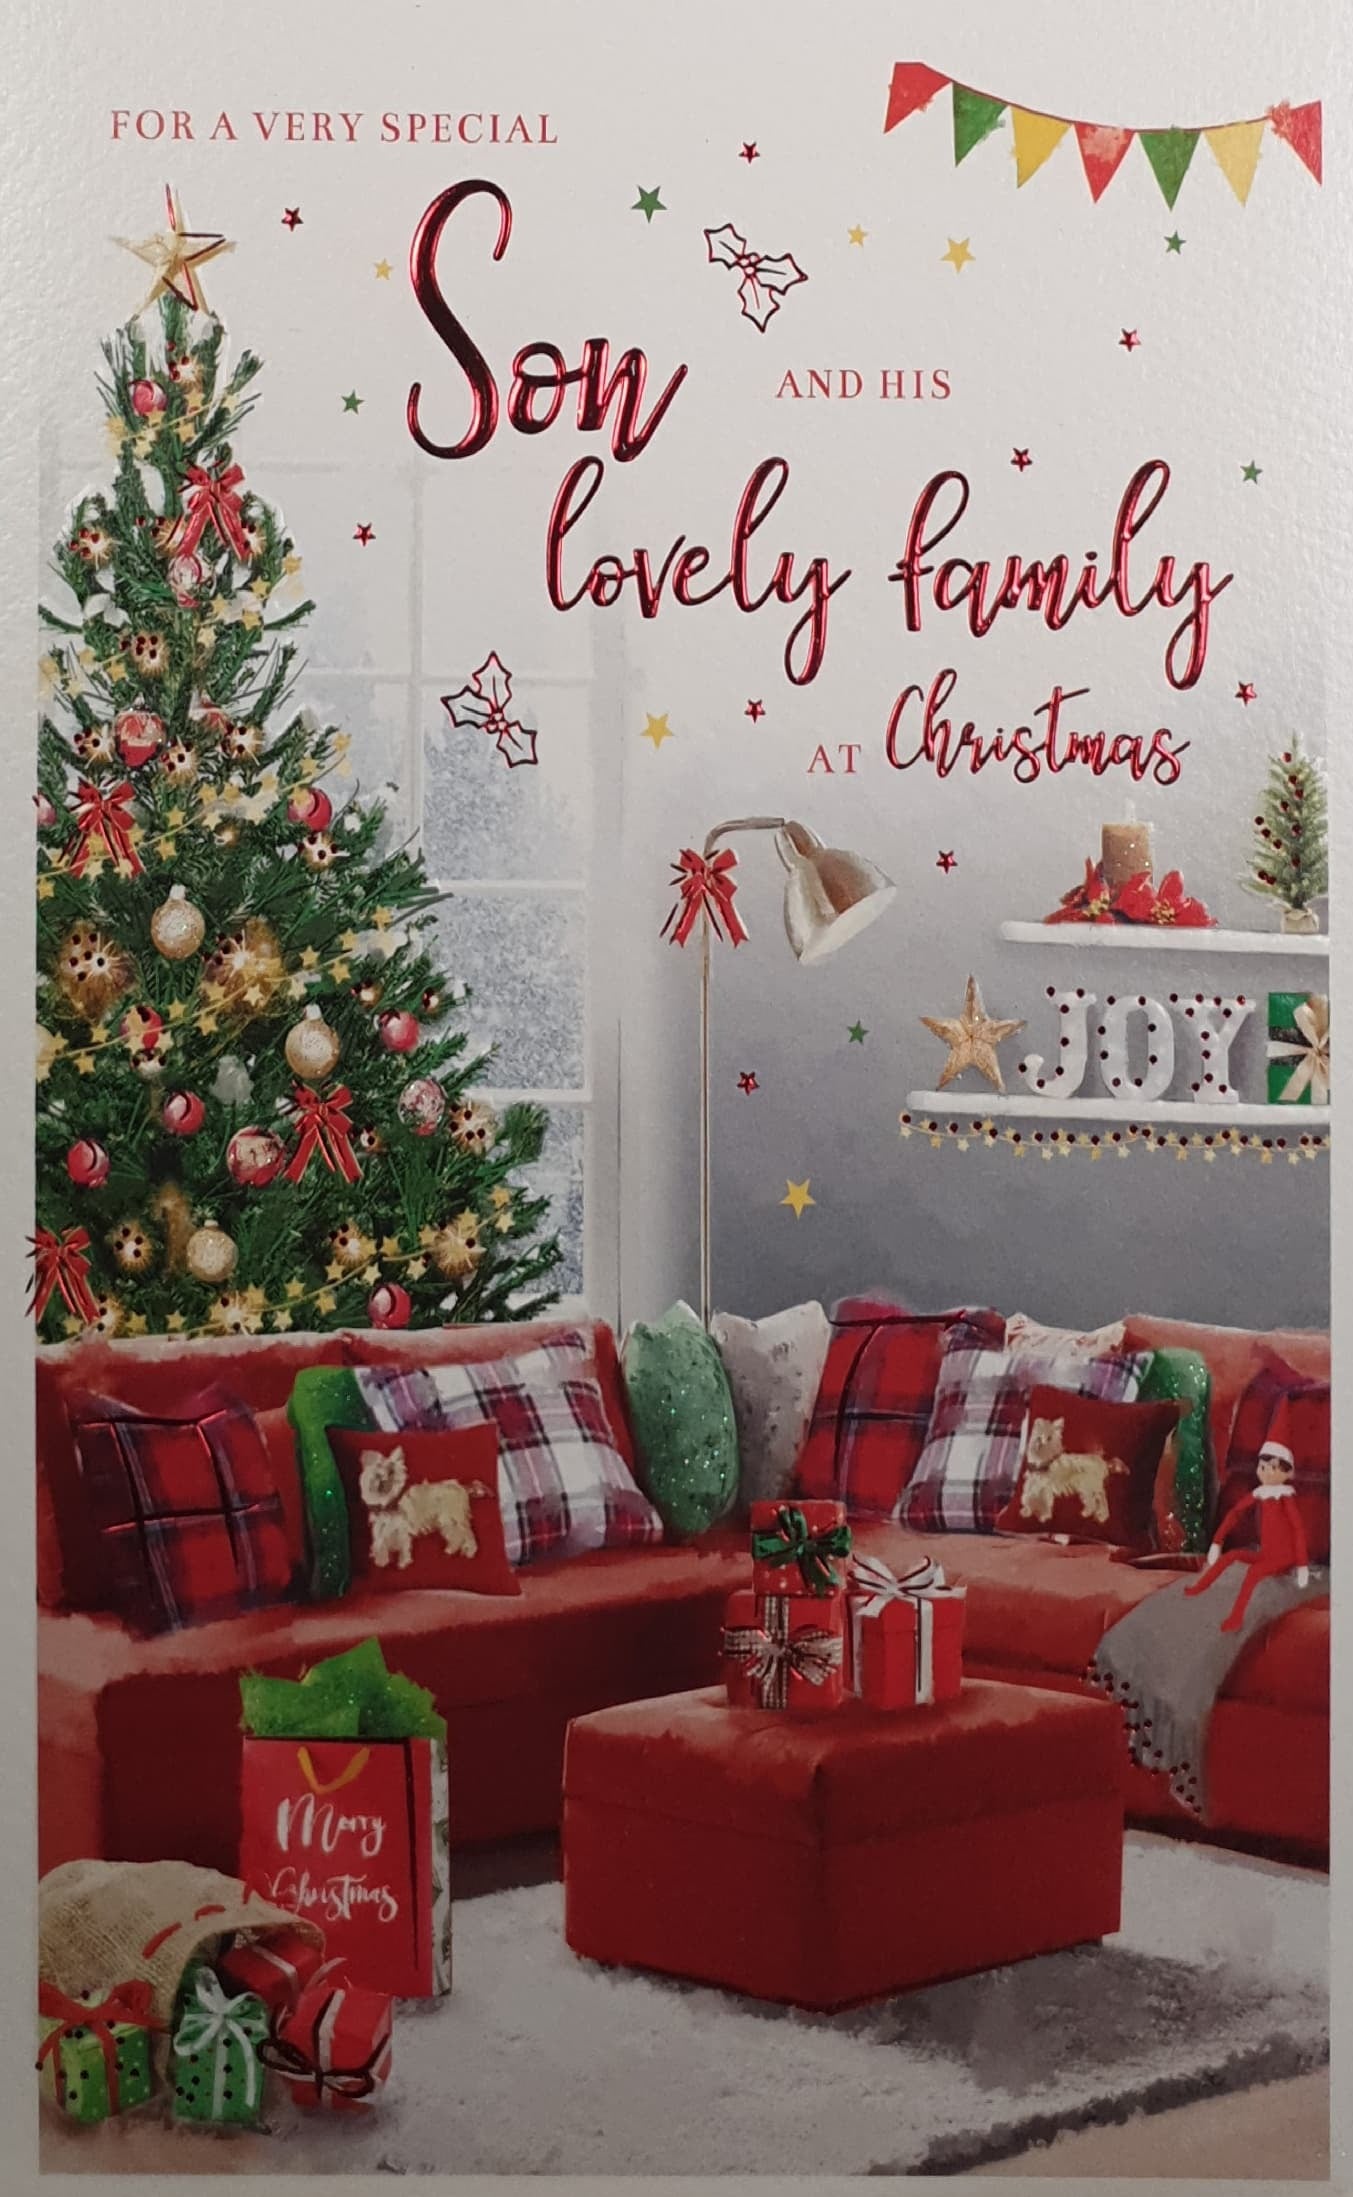 Son & Family Christmas Card -  Festive Living Room & Tree